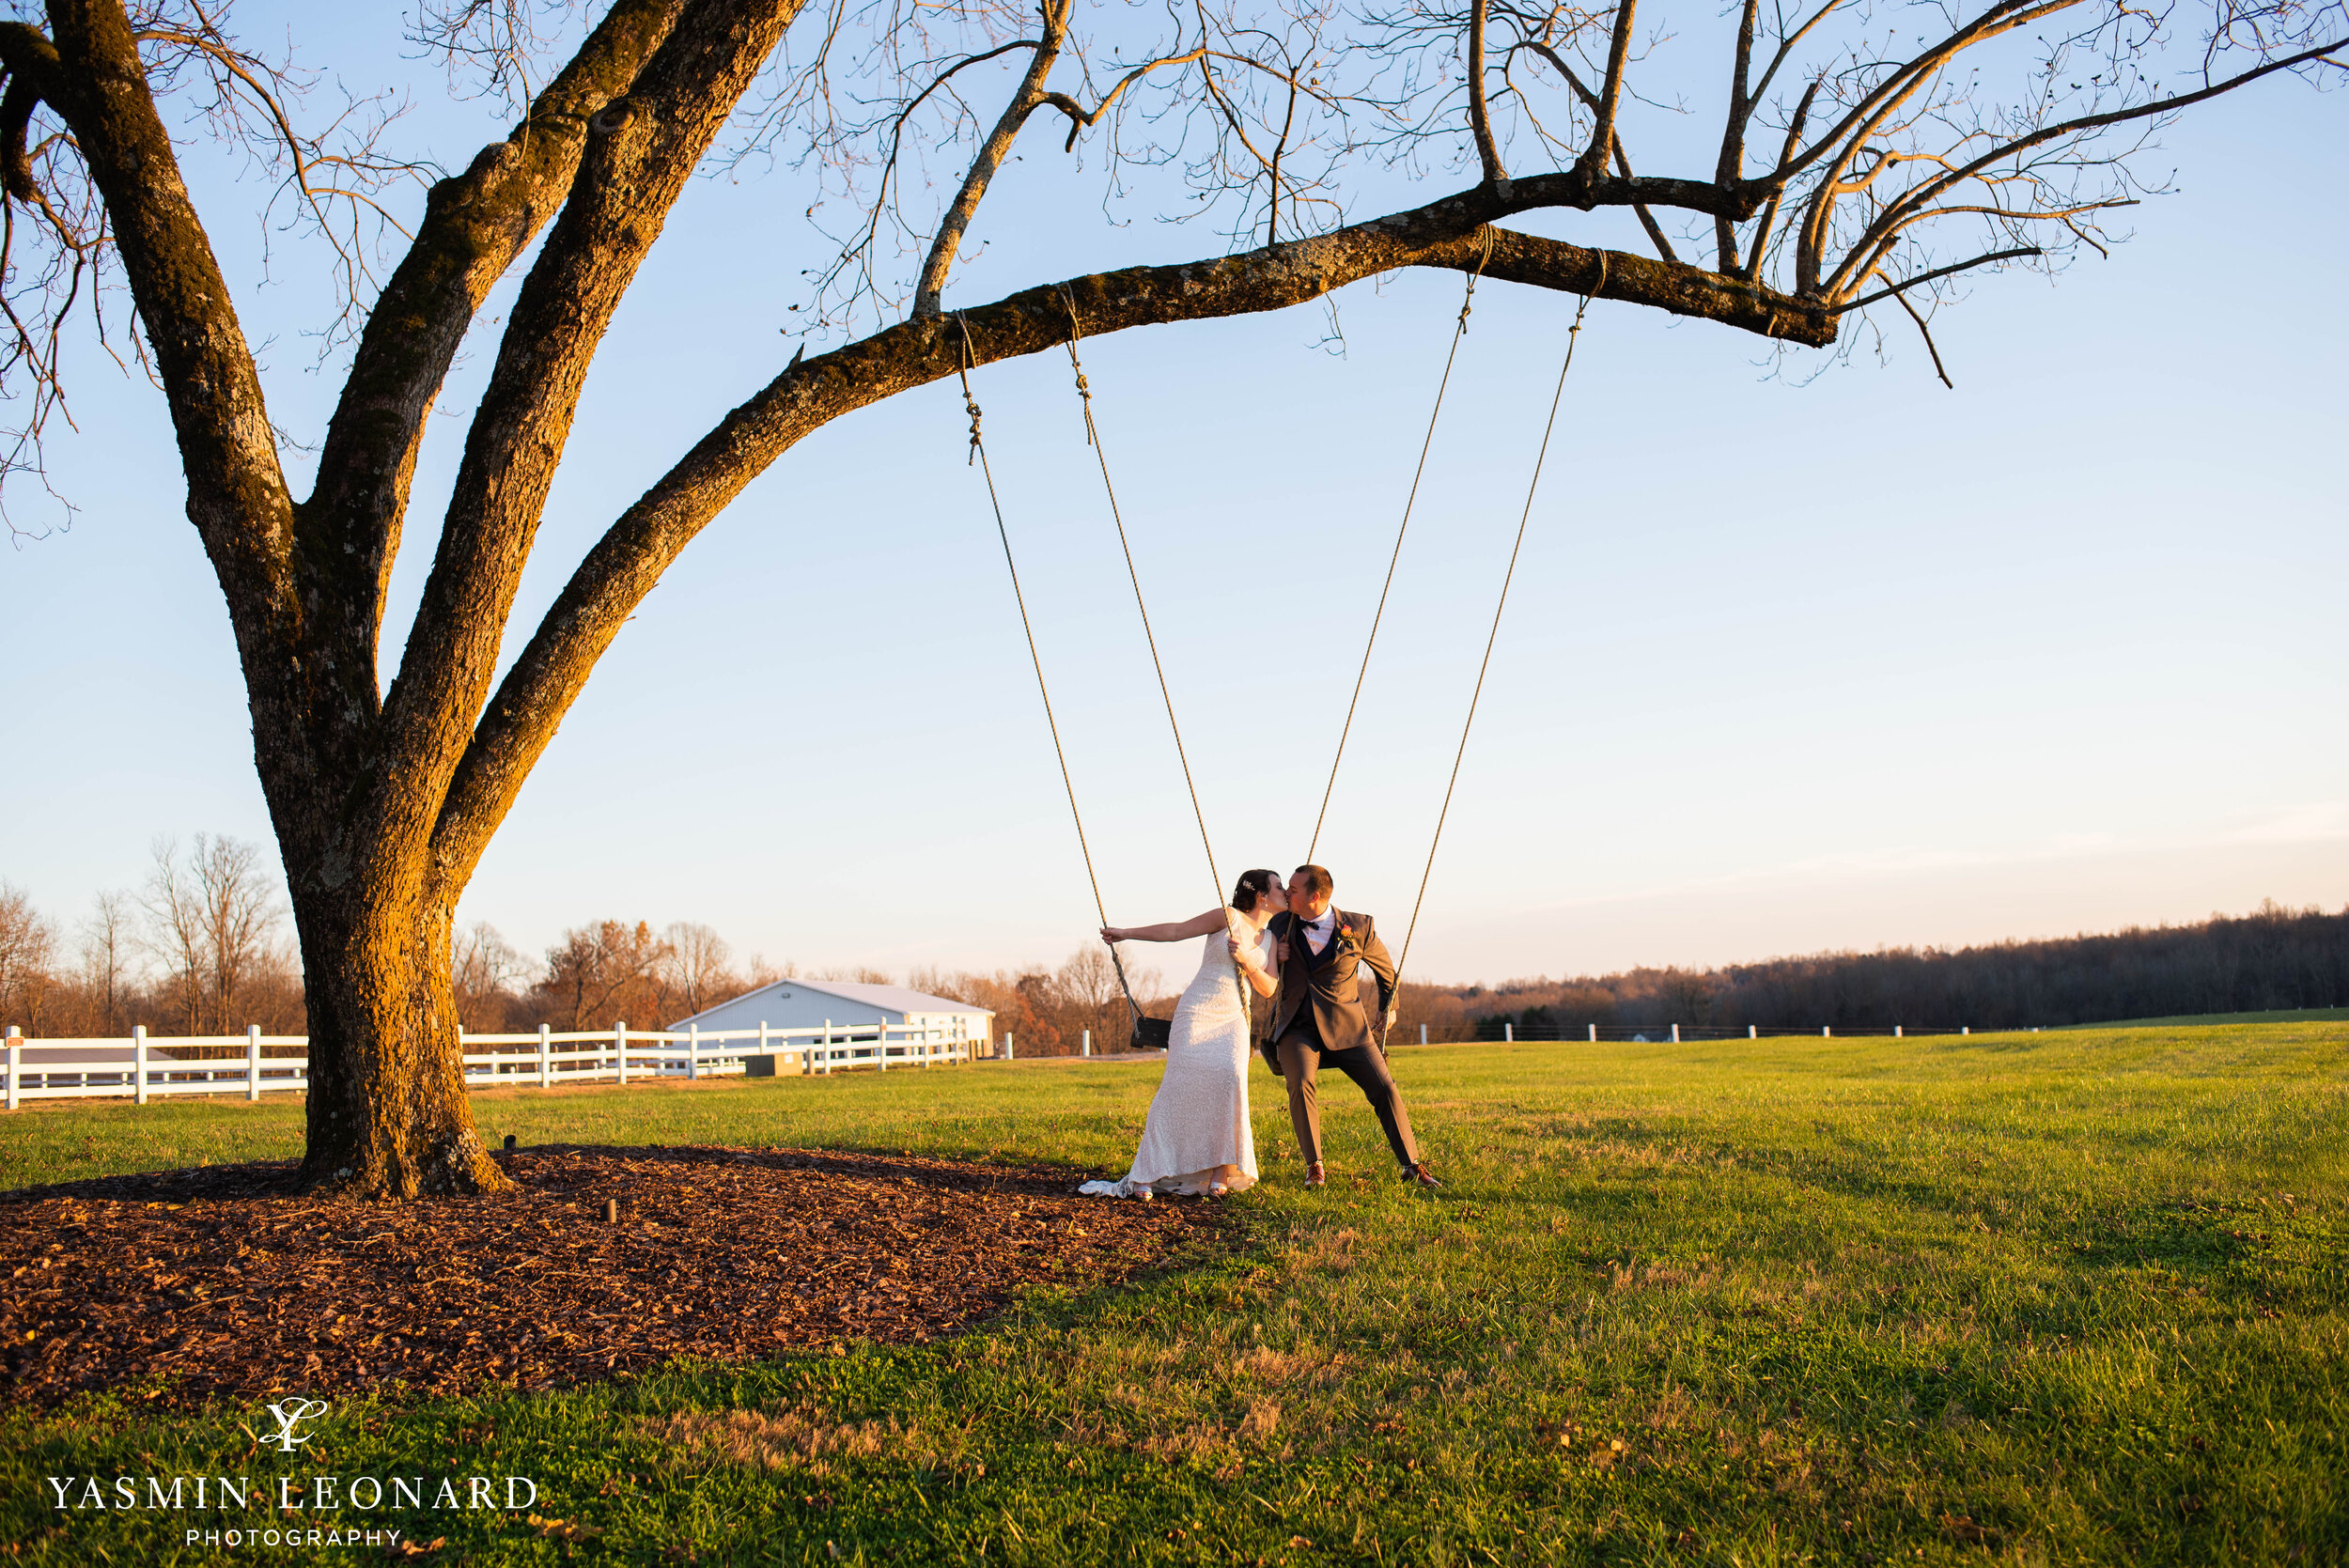 Jared and Katy - Adaumont Farms - High Point Weddings - NC Barn Weddings - Yasmin Leonard Photography-43.jpg